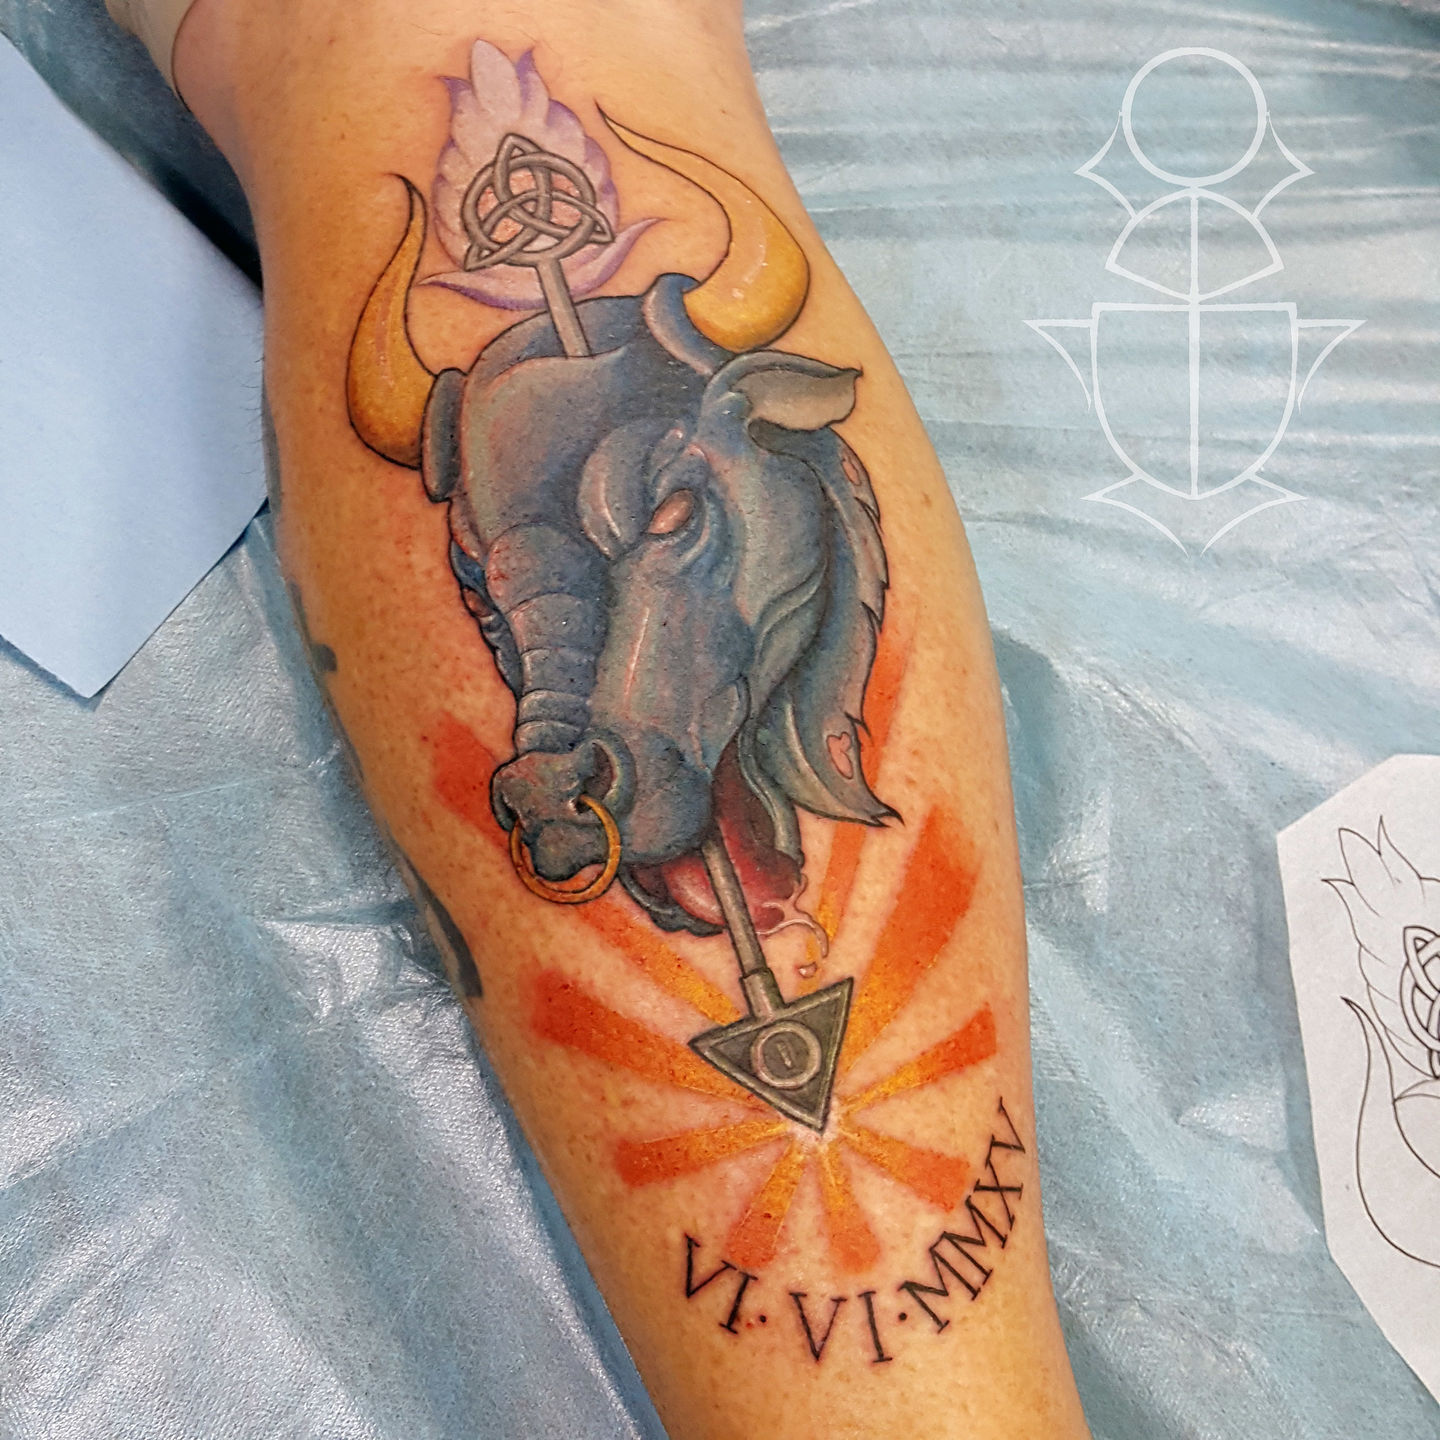 Mason's Ink Studio - Geometric bull and lion by guest artist  @alibastardostattoo #ink #tattoo #bodyart #legian #inked #tatts #indonesia  #baliholiday #masonsink #masonsinkstudio #tattoos #getinked #tattooshop  #art #geometrictattoo #liontattoo ...